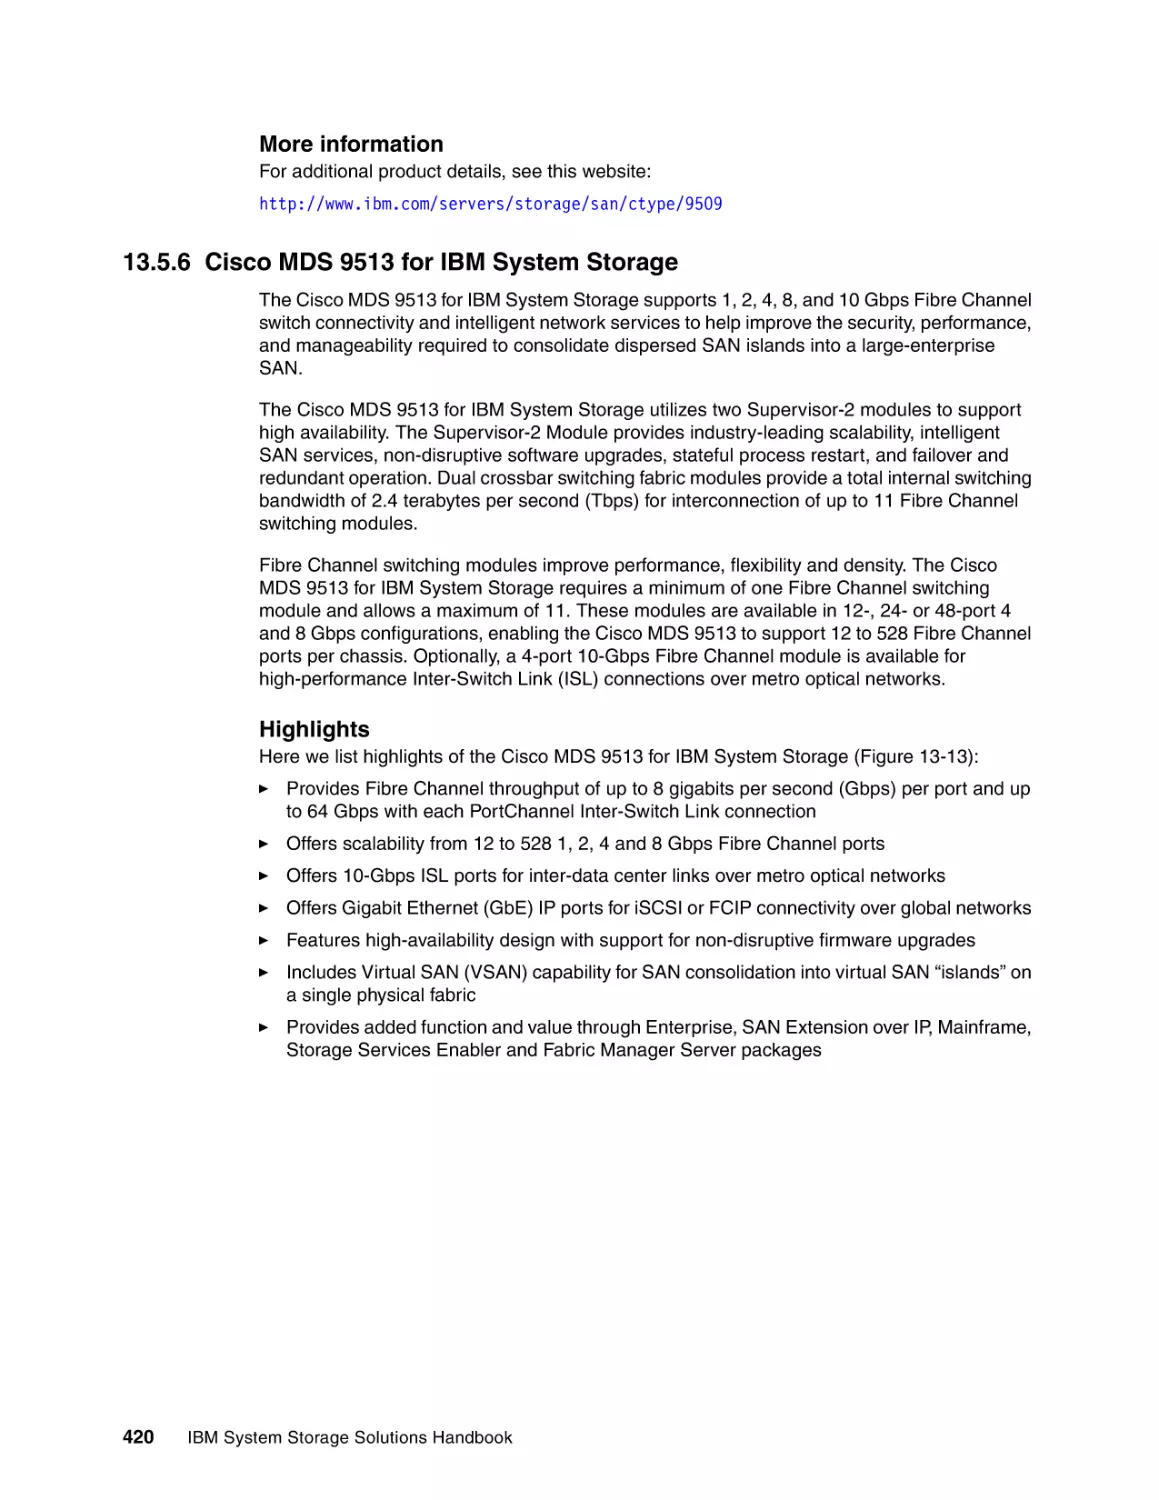 13.5.6 Cisco MDS 9513 for IBM System Storage